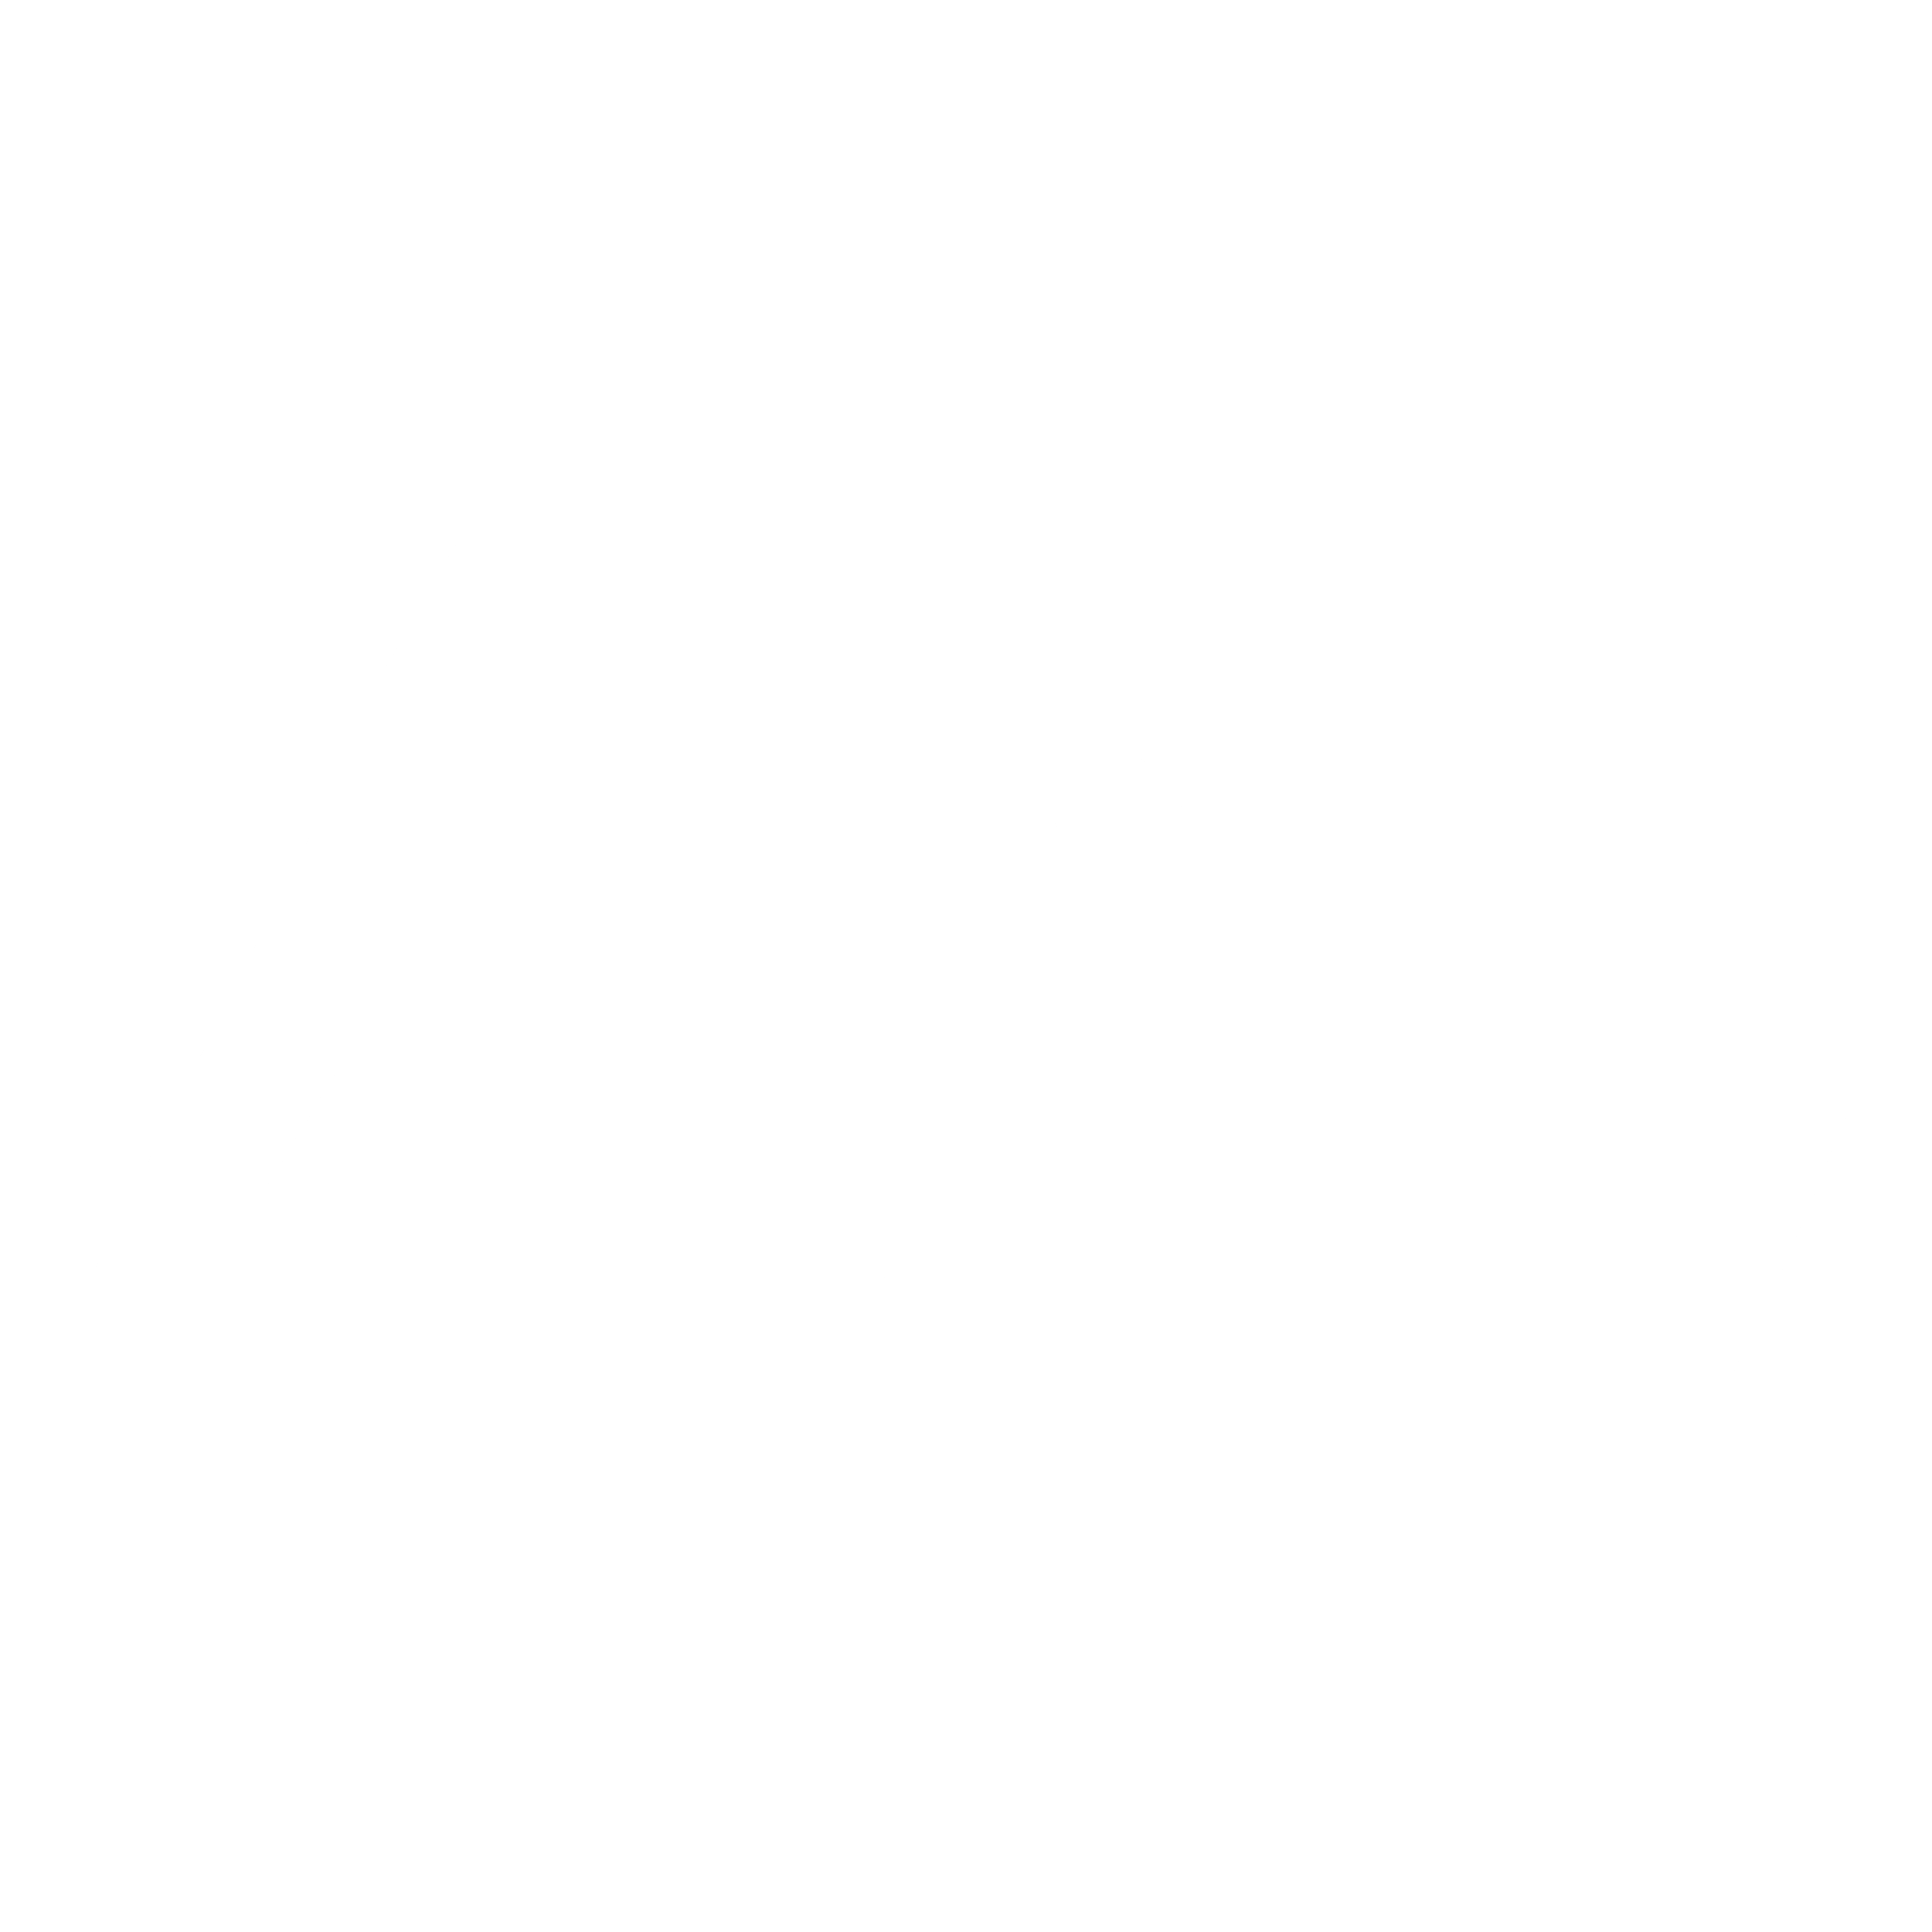 Atmel Logo - Atmel Logo PNG Transparent & SVG Vector - Freebie Supply